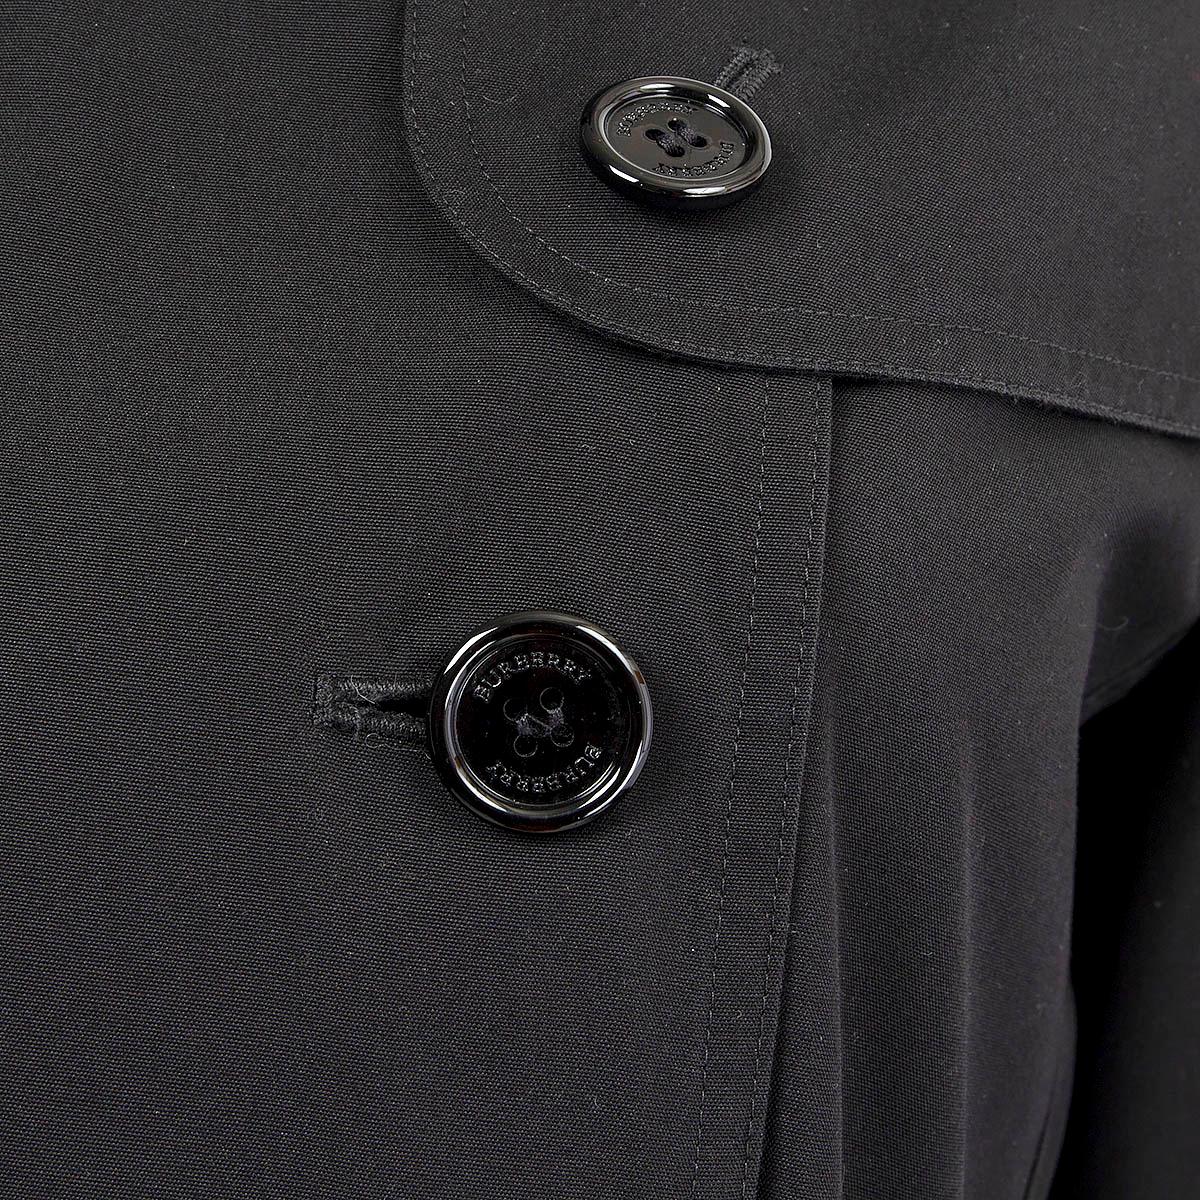 Women's BURBERRY LONDON black cotton blend KENSINGTON SHORT TRENCH Coat Jacket 10 S